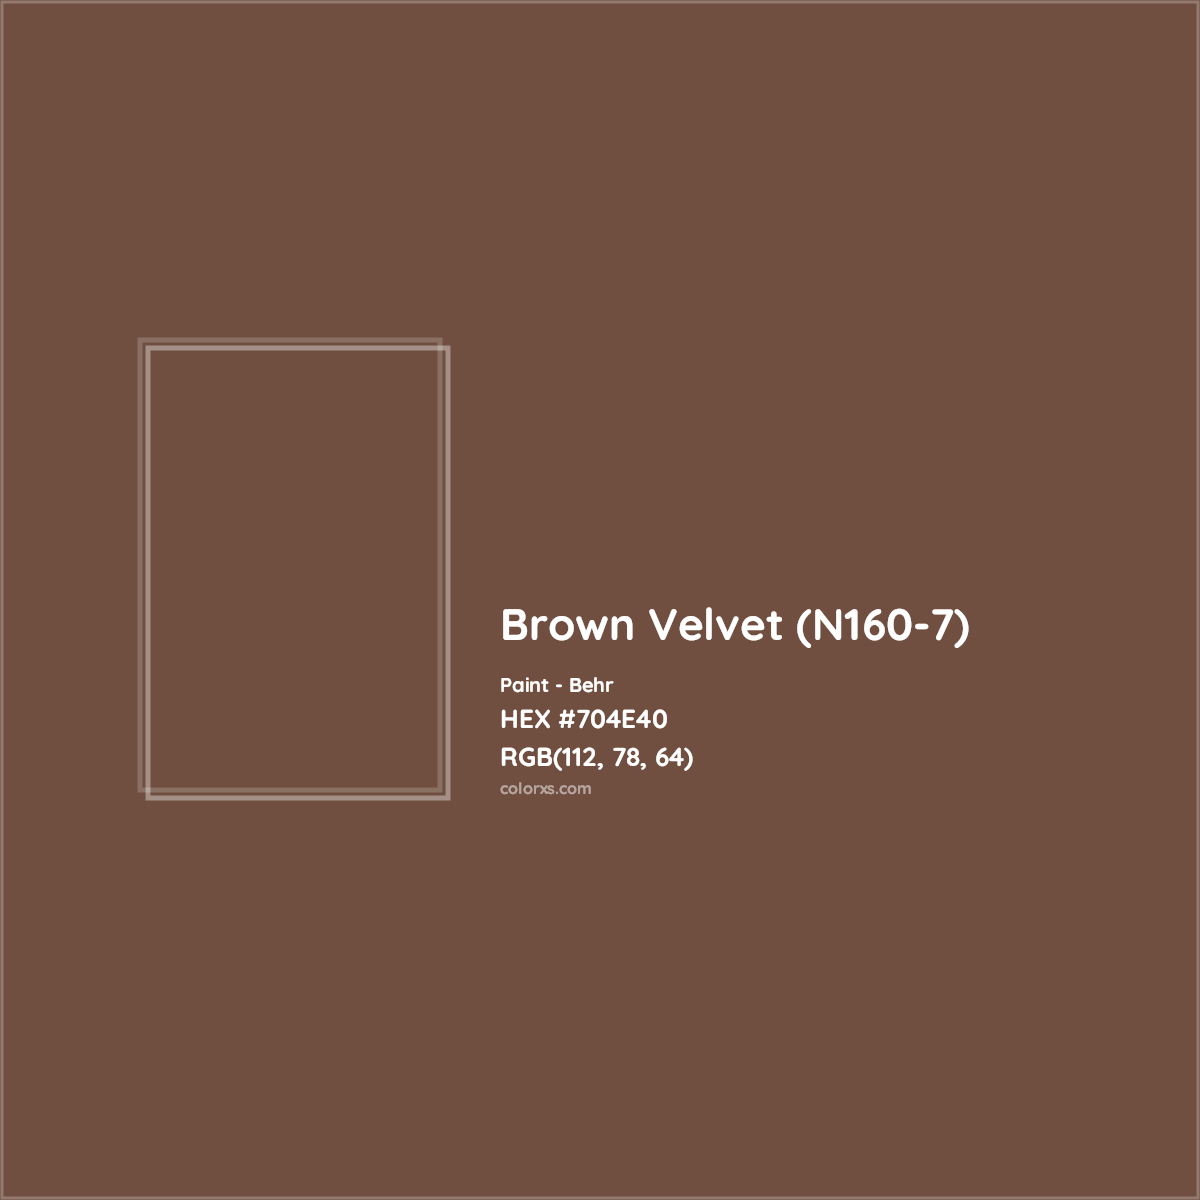 HEX #704E40 Brown Velvet (N160-7) Paint Behr - Color Code